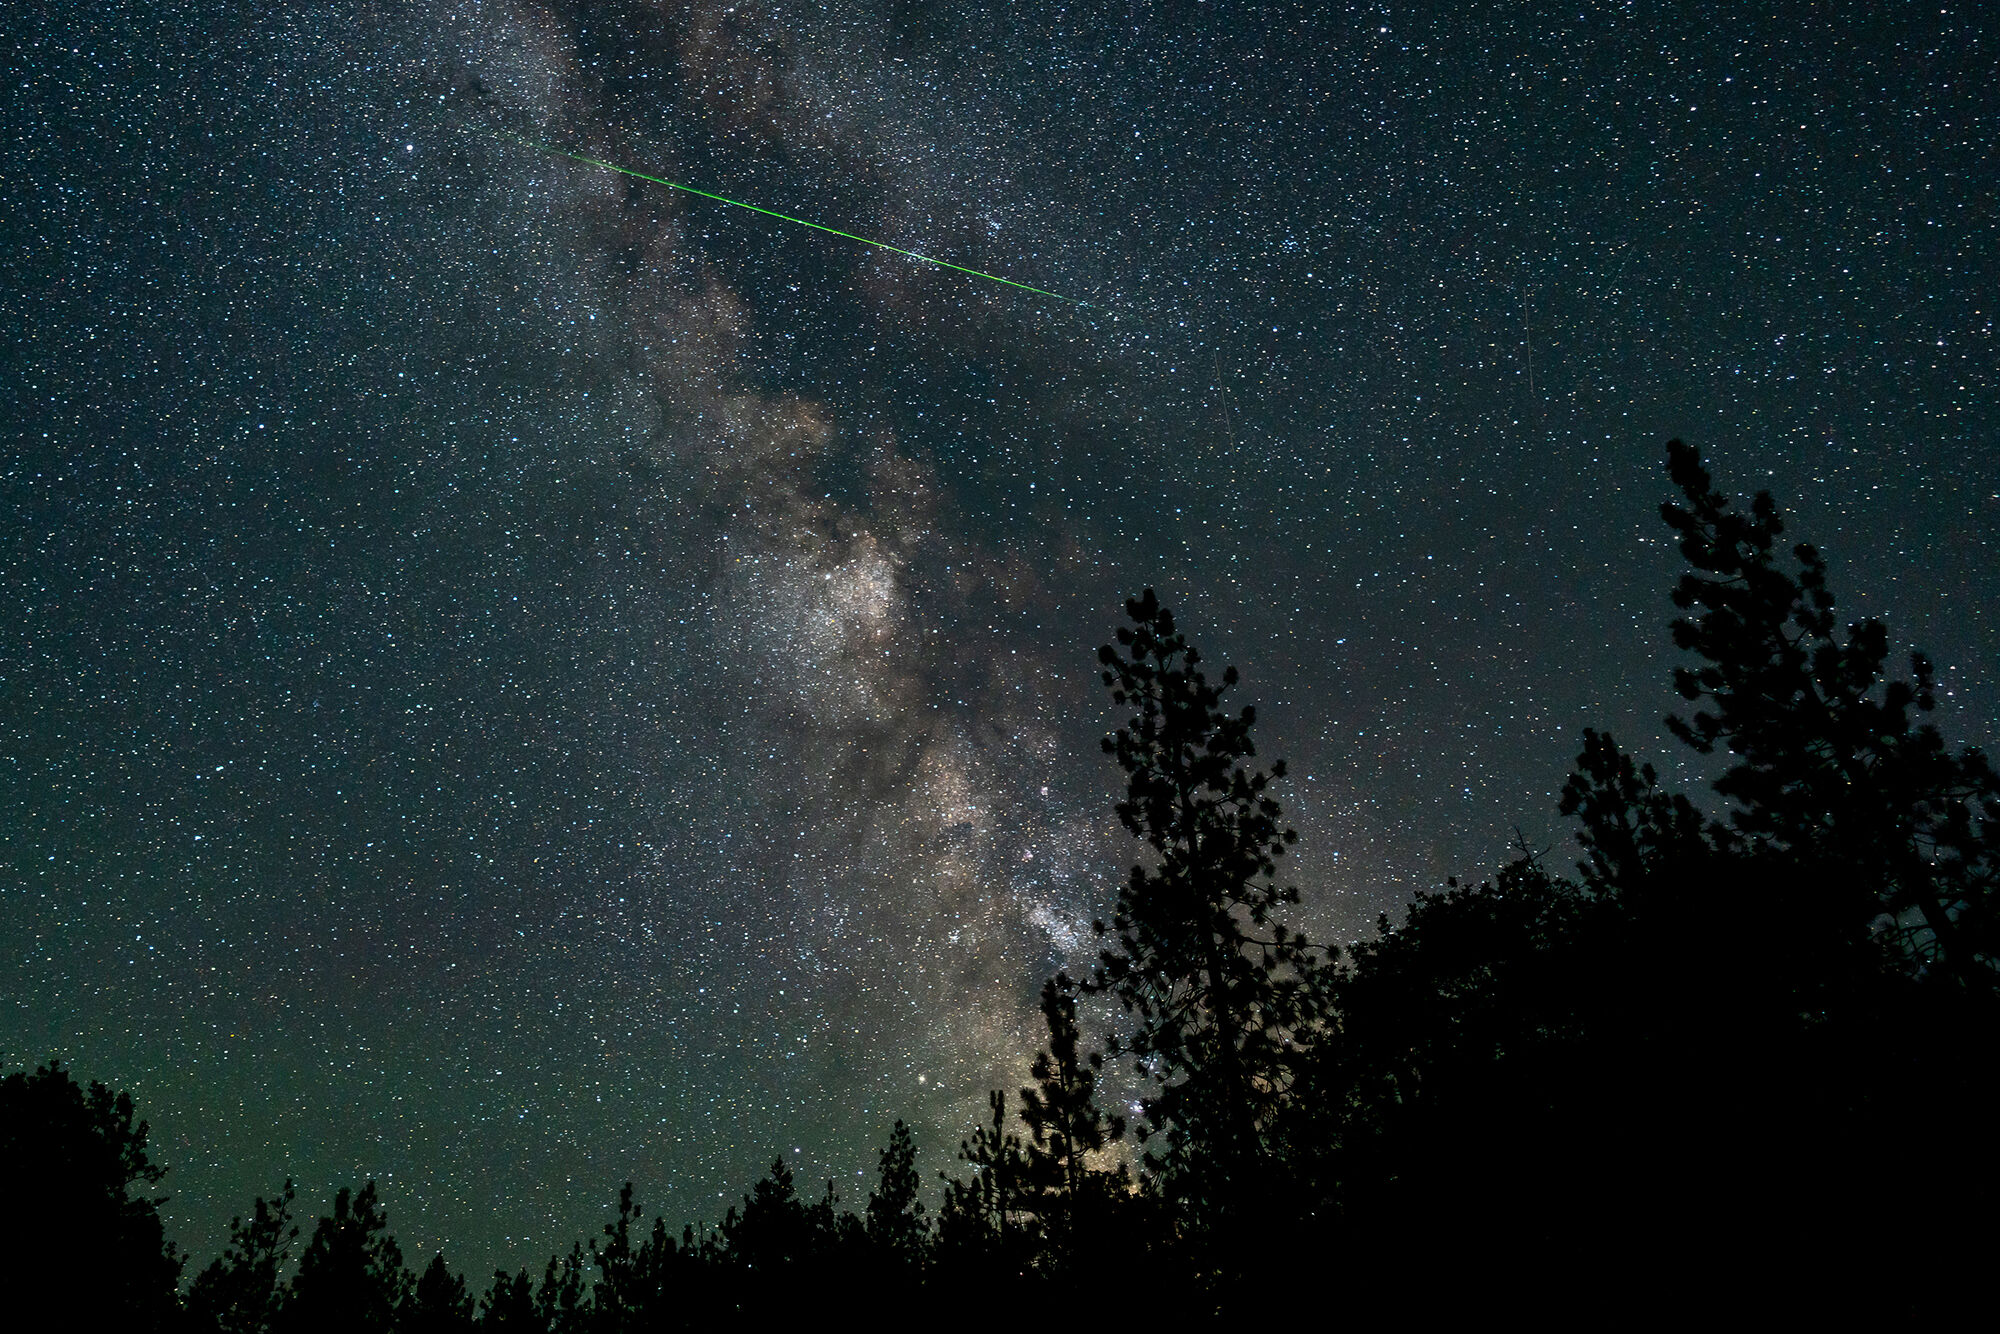 Delta Aquarid meteor with the Milky Way